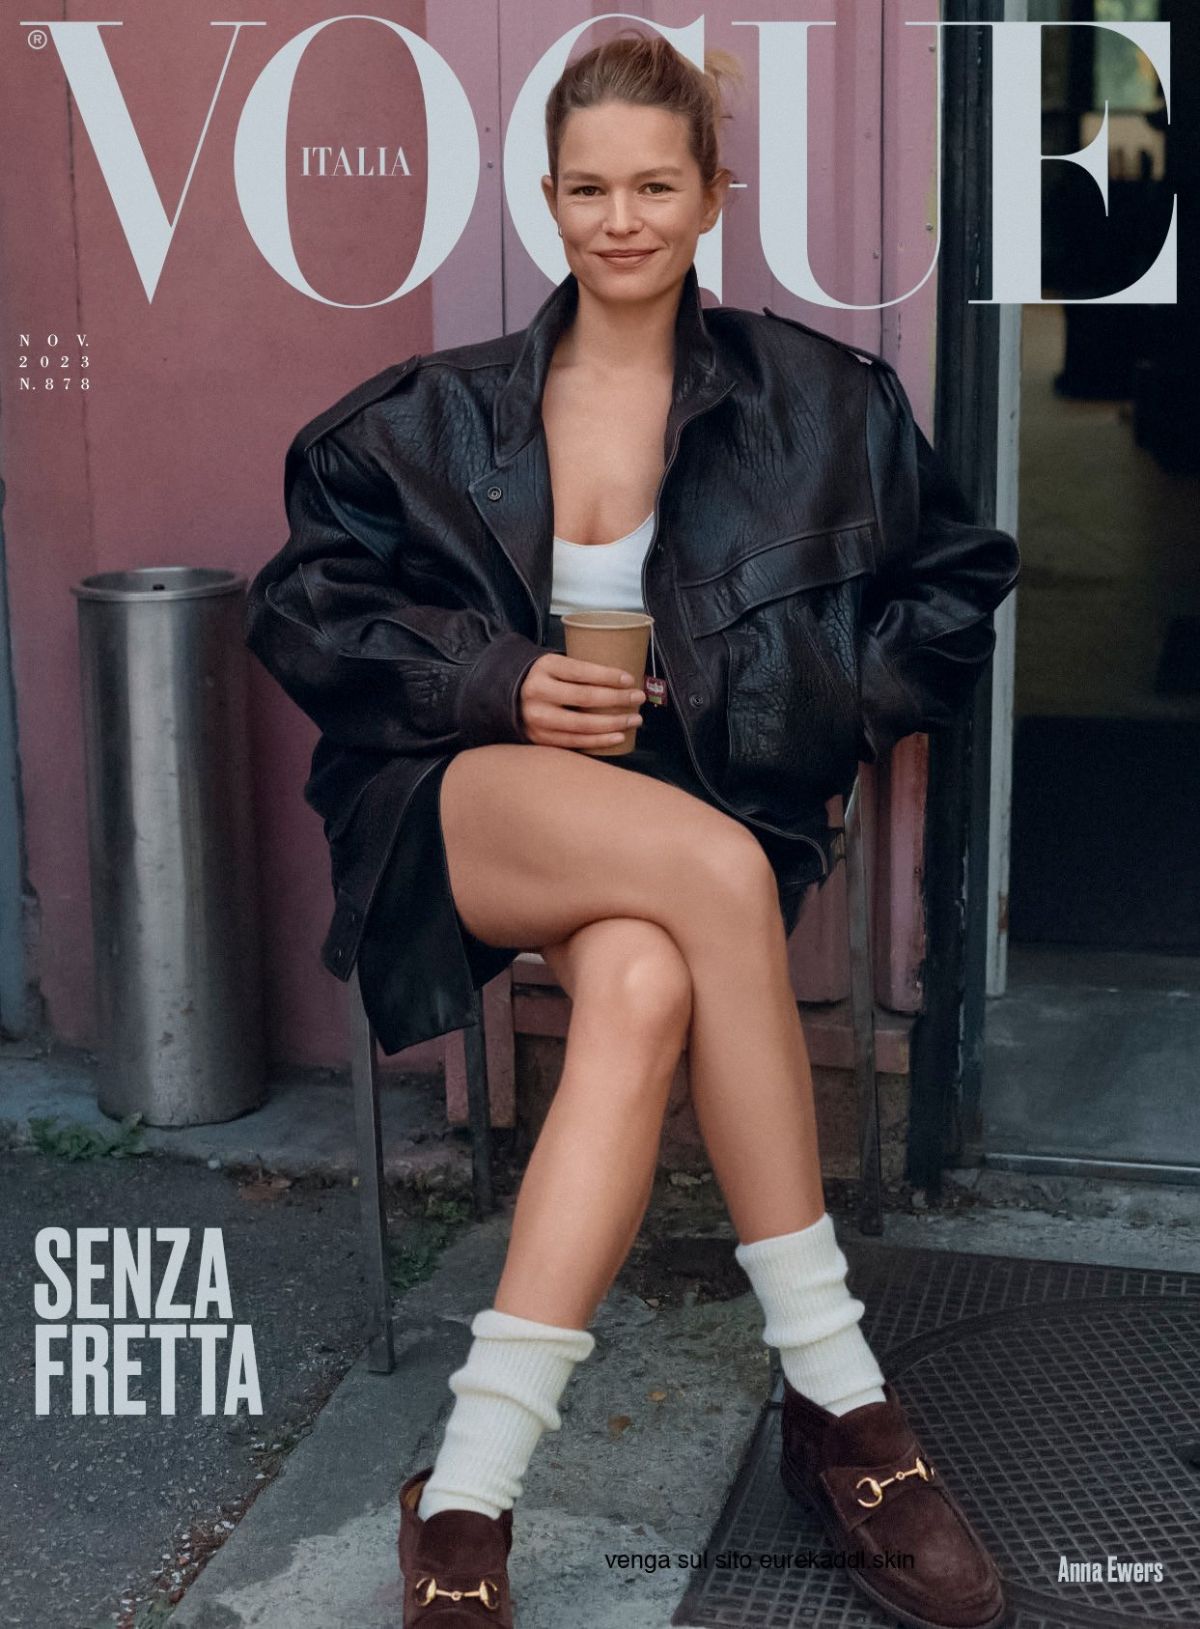 Anna Ewers Covers Vogue Italia November 2023